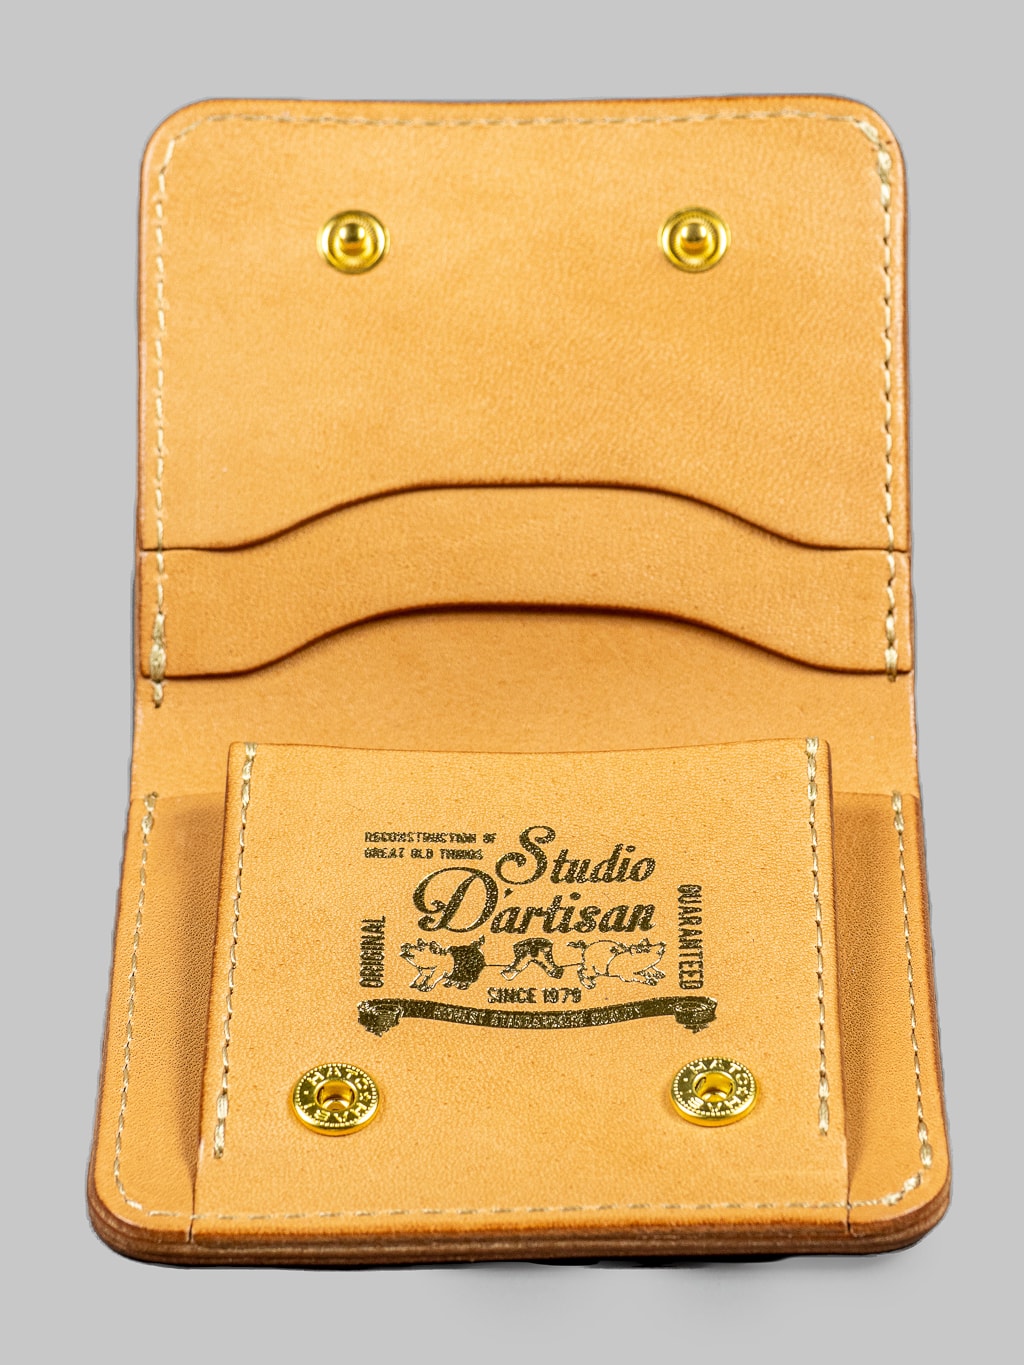 Studio Dartisan natural leather mini wallet interior details